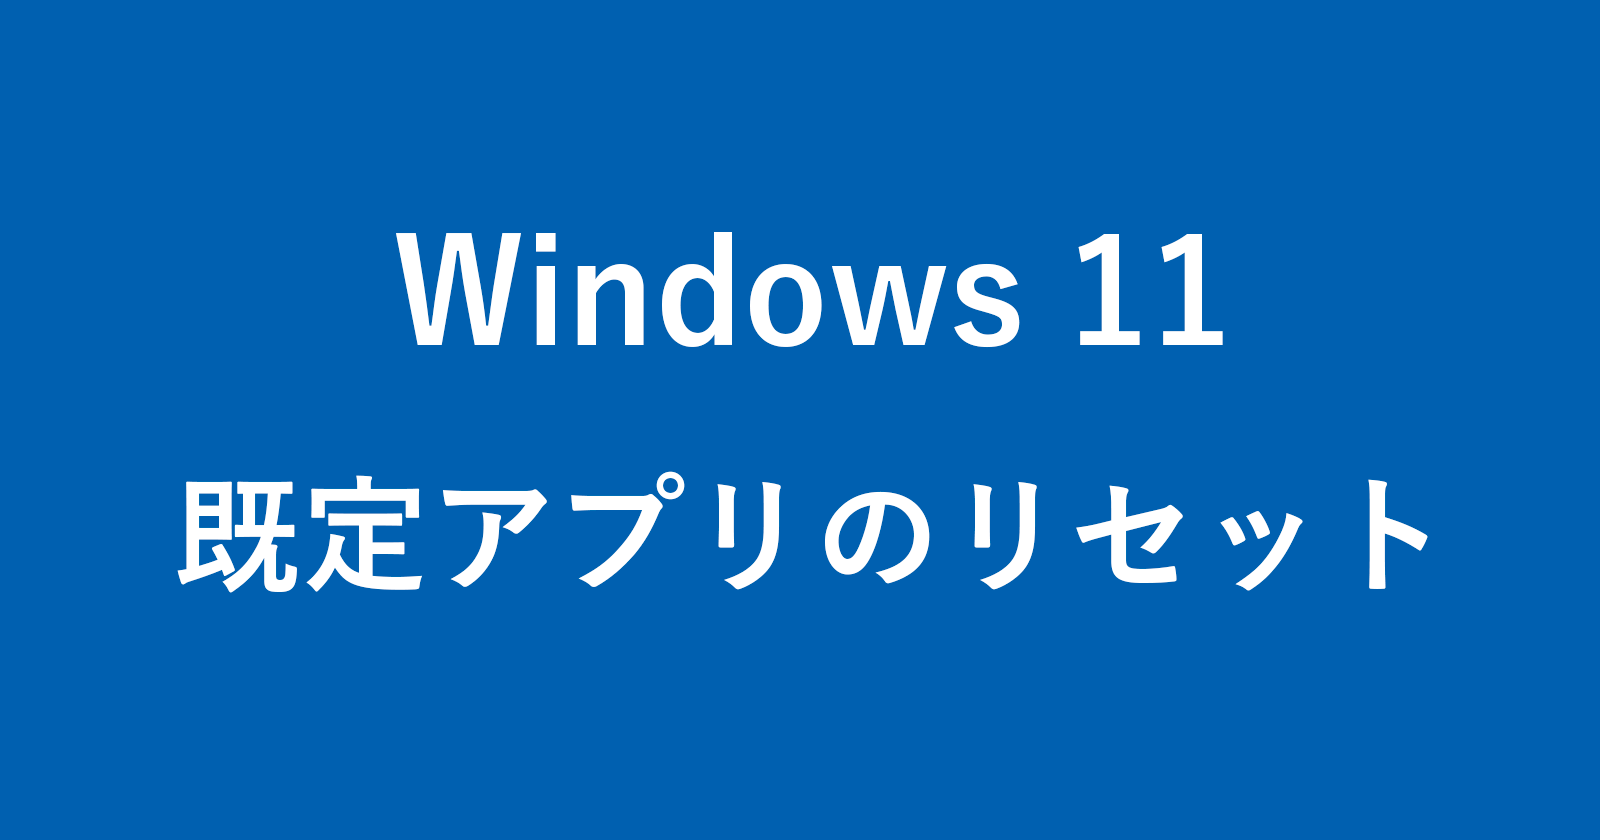 windows 11 reset defaults app